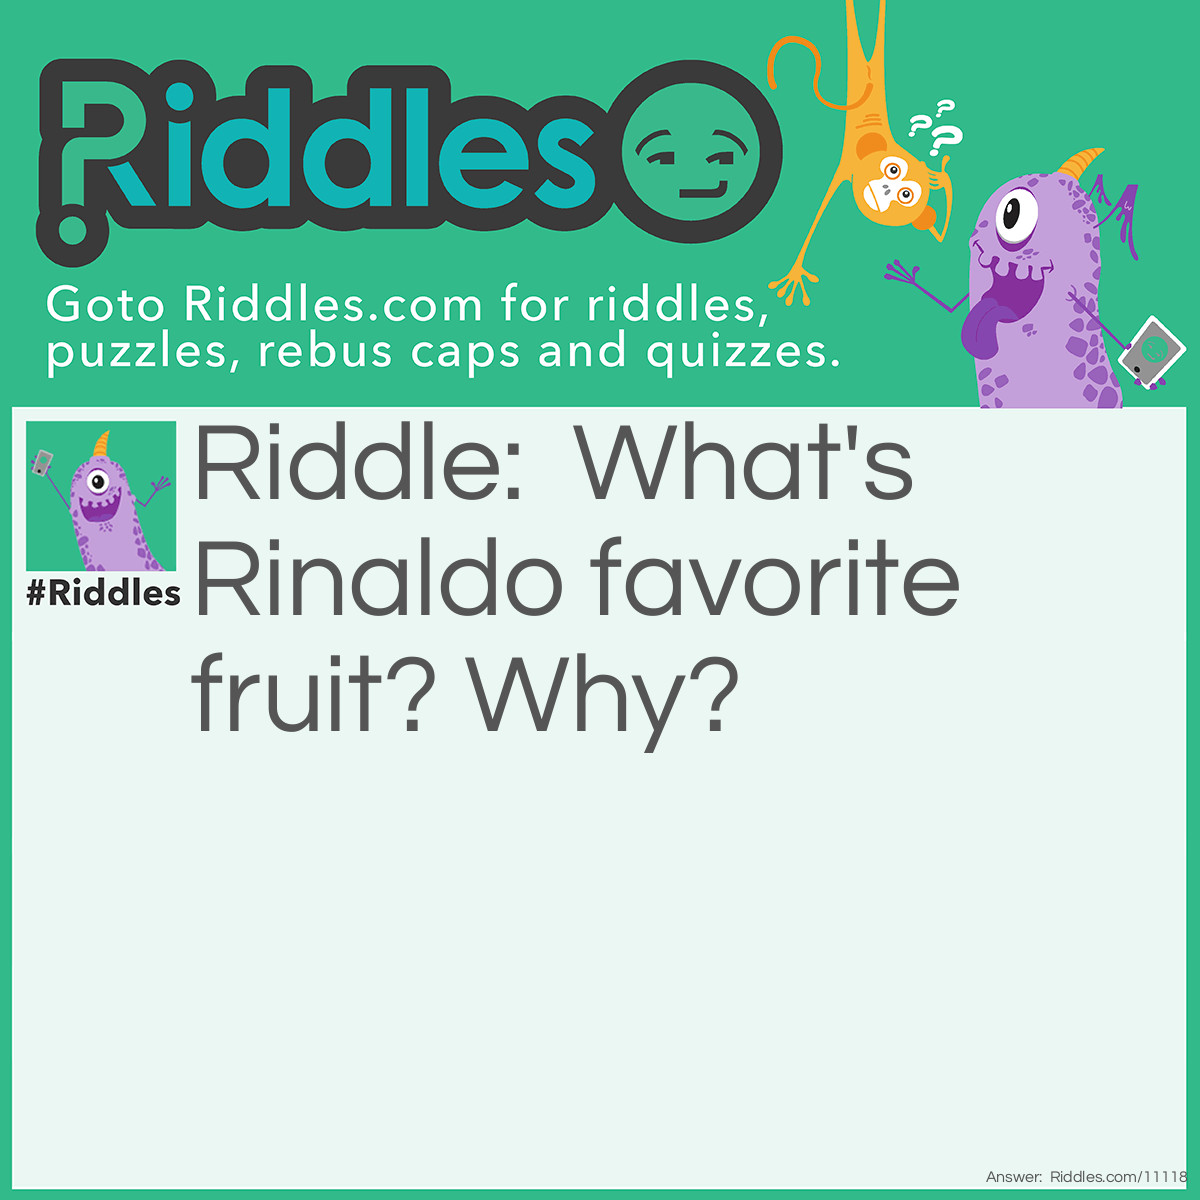 Riddle: What's Rinaldo favorite fruit? Why? Answer: Orange because it has vitamin c.